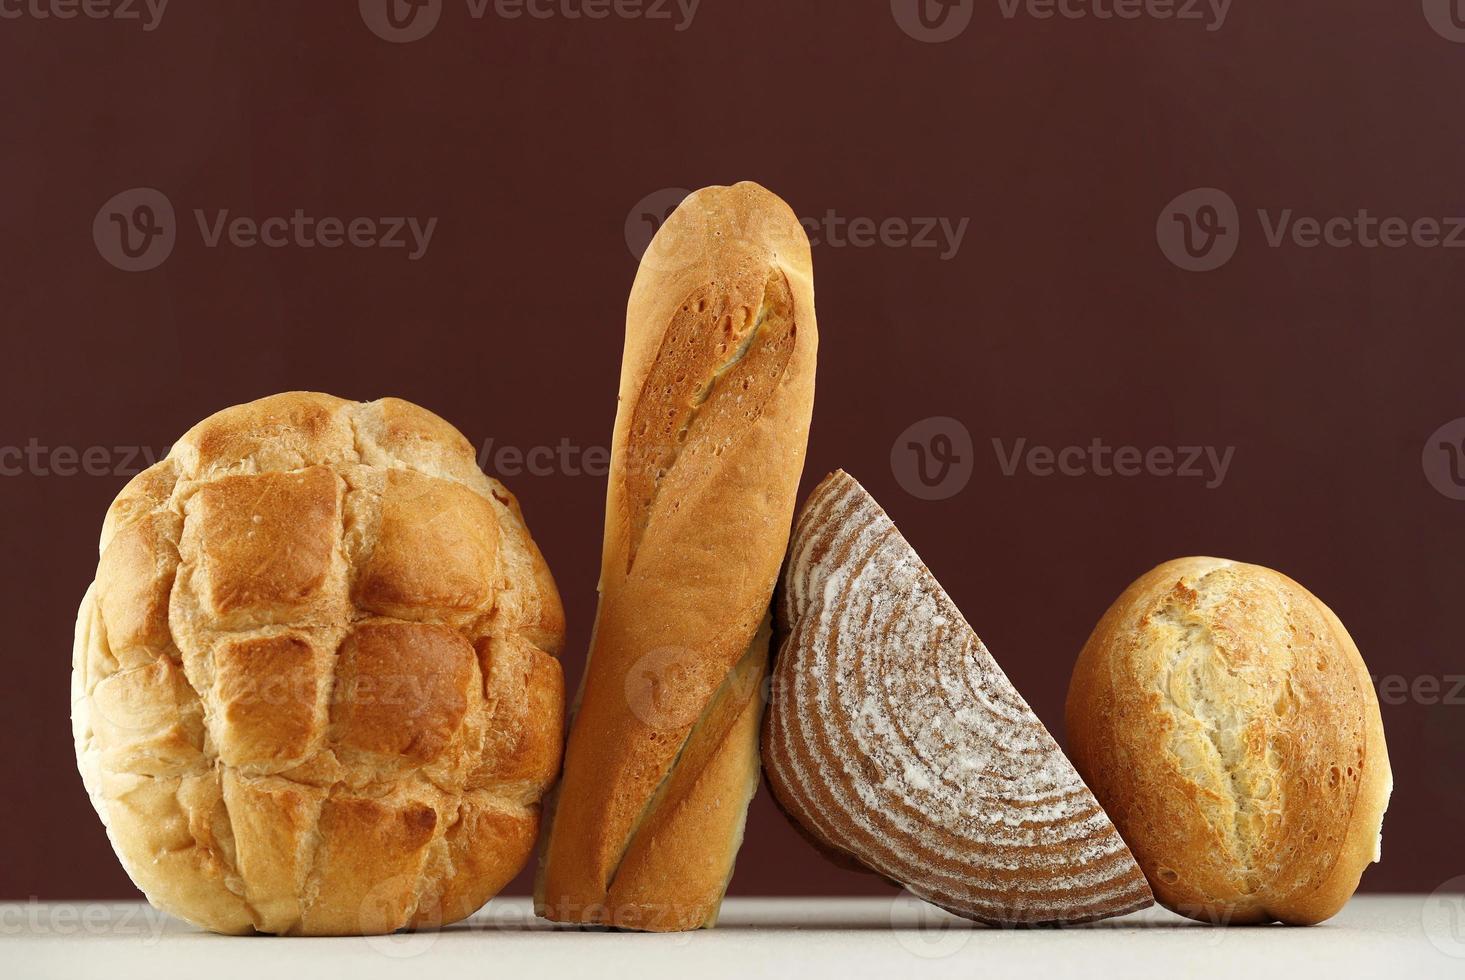 vari tipi di pane rustico, pasta madre, baguette, boule isolati su tavola marrone. foto